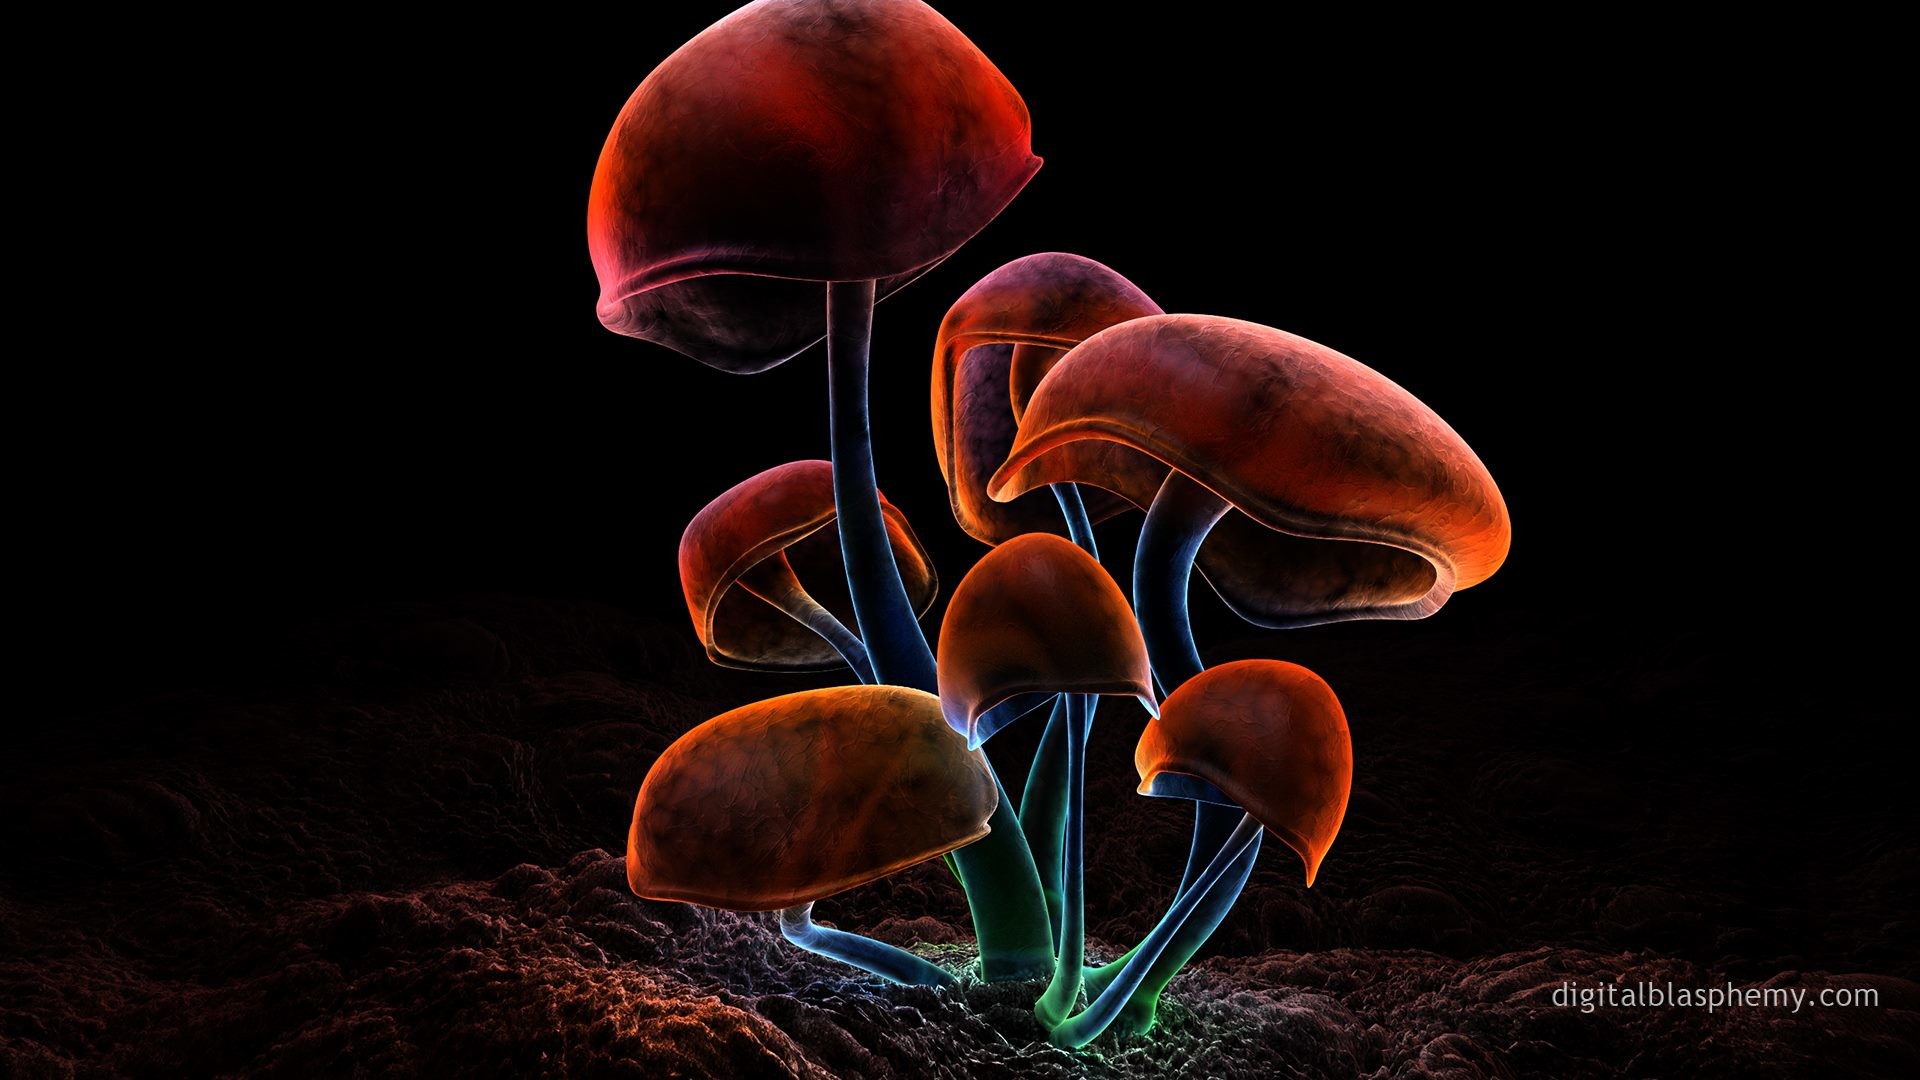 1920x1080 Mushrooms wallpaper 2560x1600 jpg | Tokeh | Pinterest | Mushrooms and  Digital art